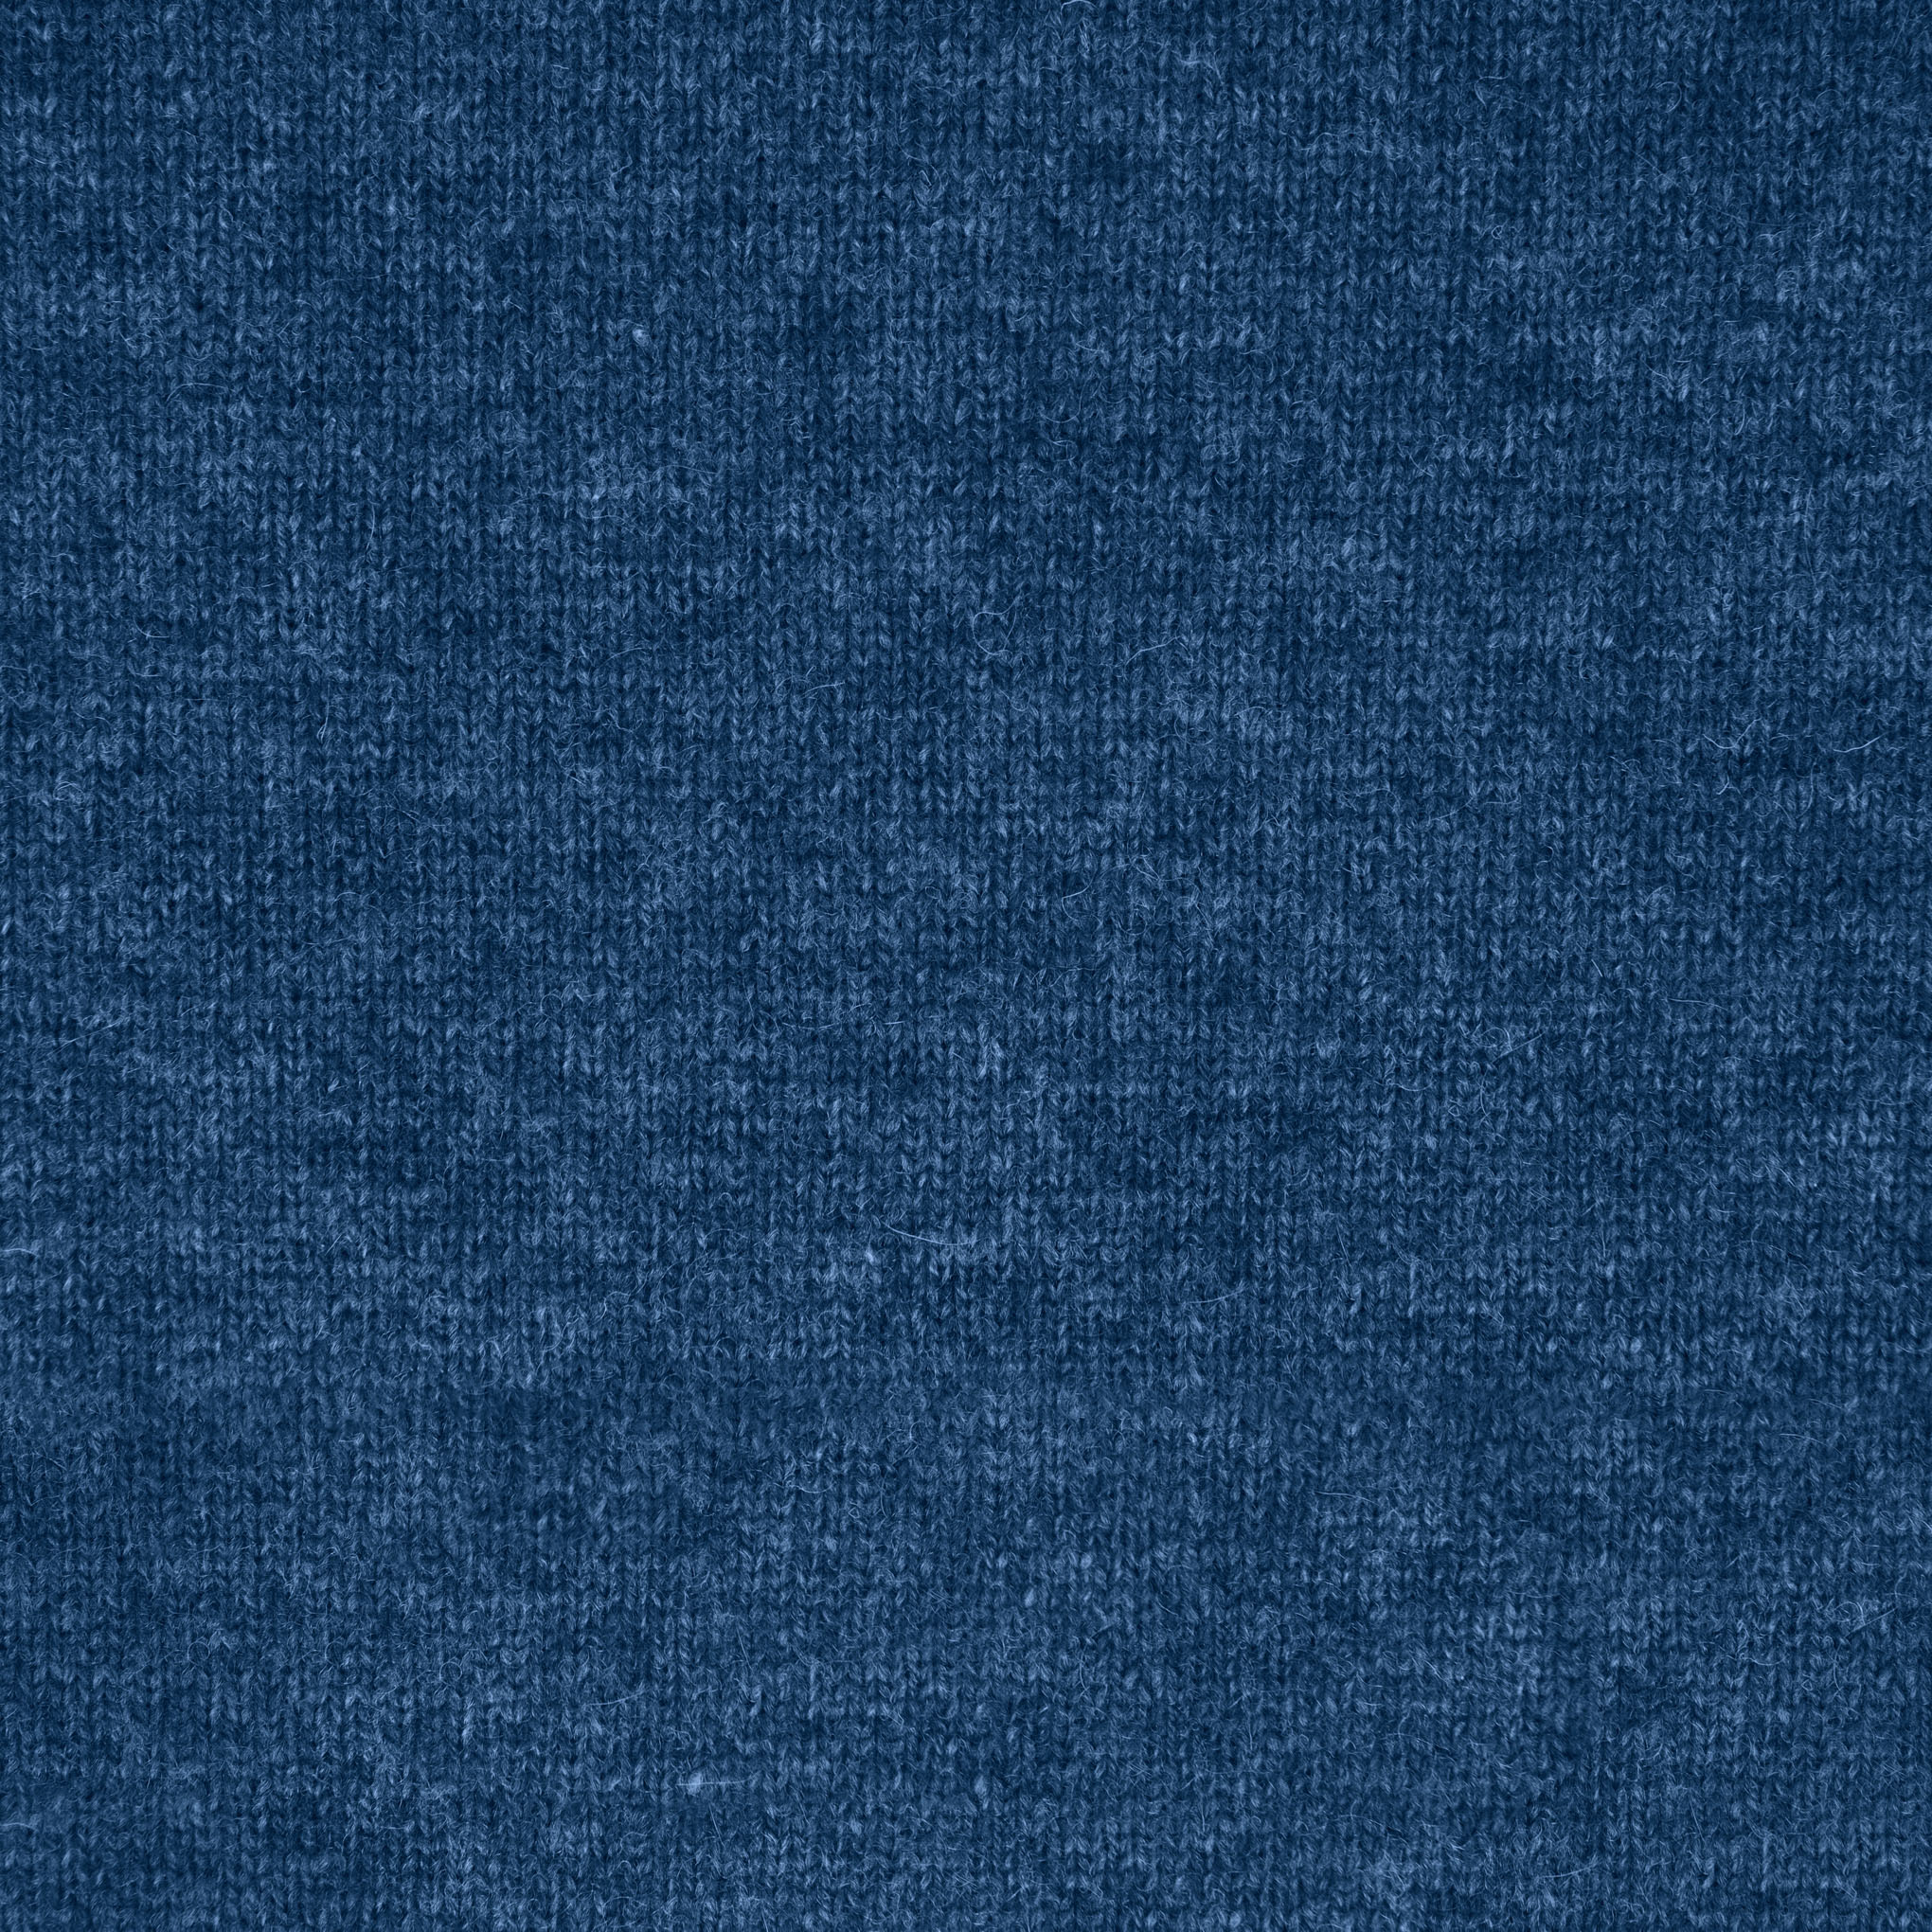 MO 150 Bay Sofa Imperial Blue Fabric Closeup 4